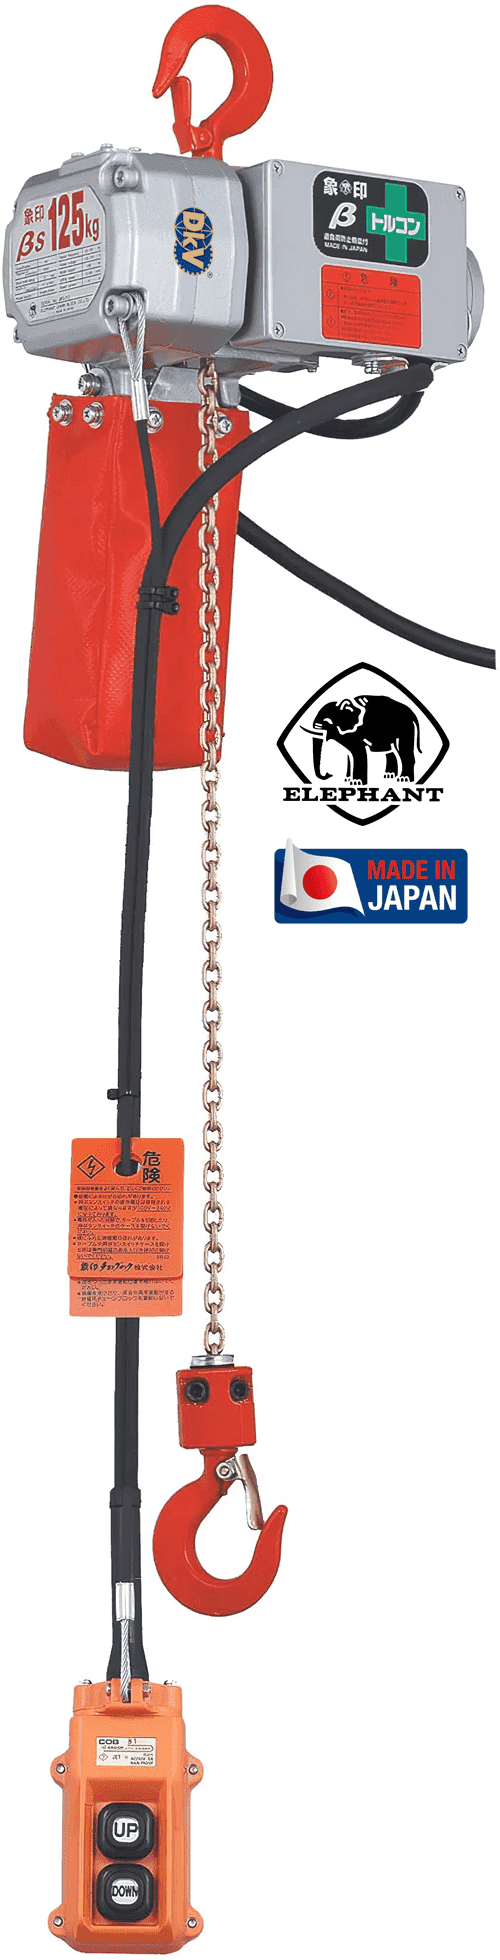 Pa lăng xích điện Elephant H-012, Elephant electric chain hoists H-012